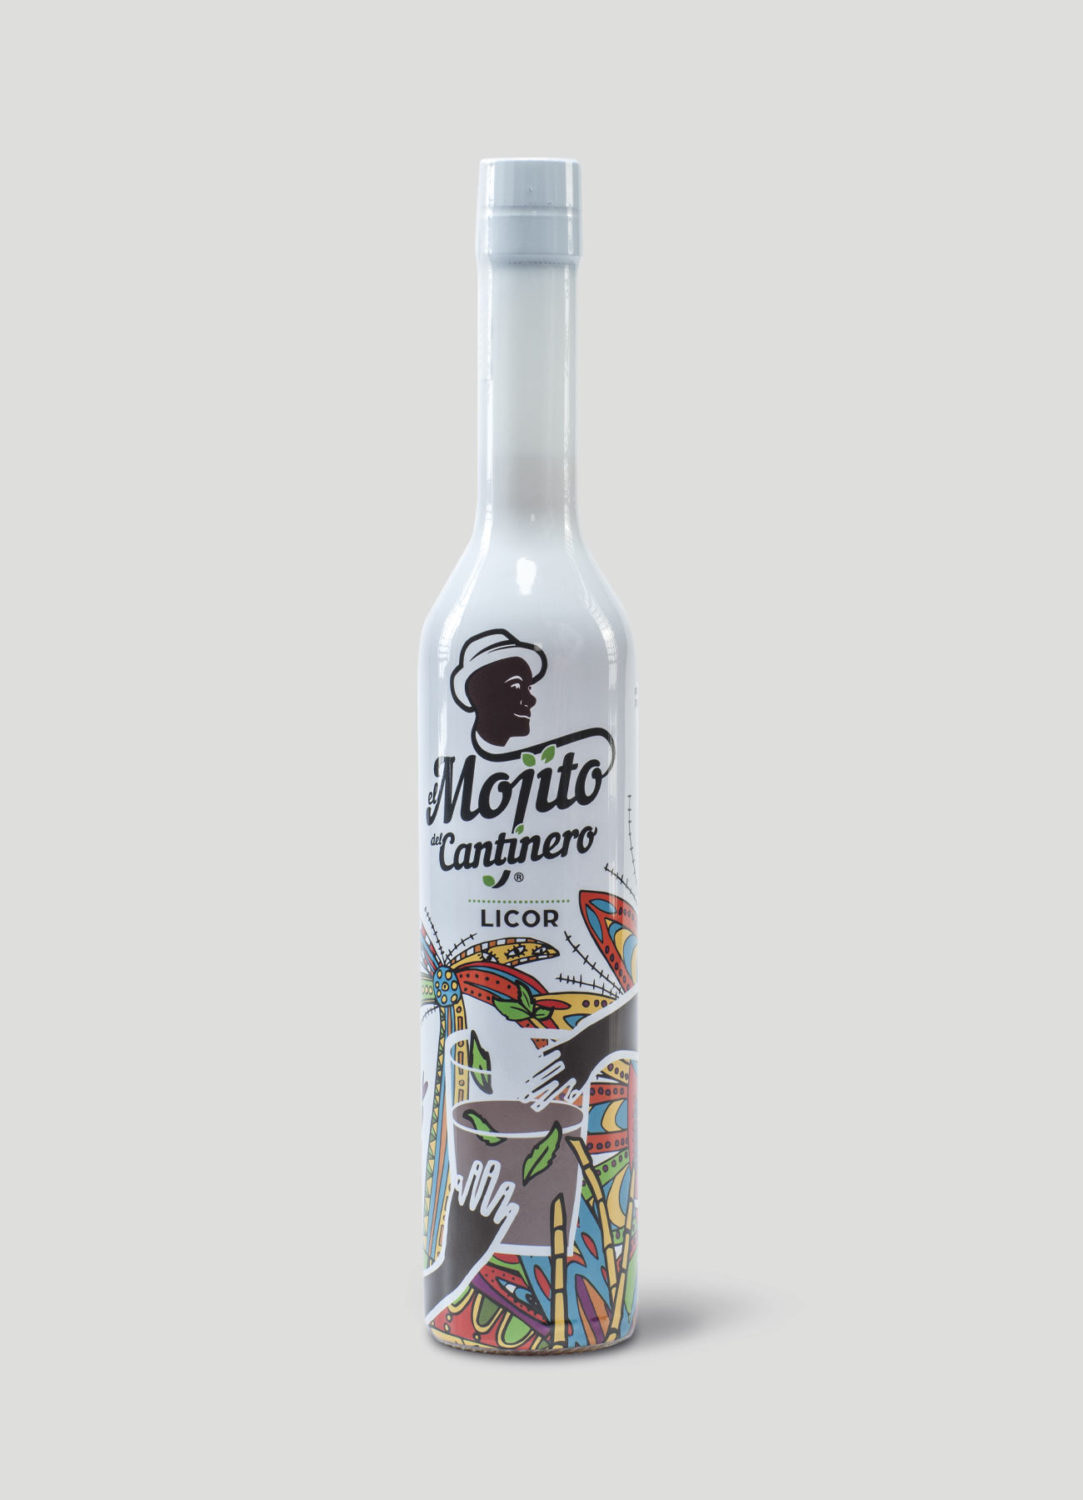 Imagen gráfica botella El mojito del canitnero